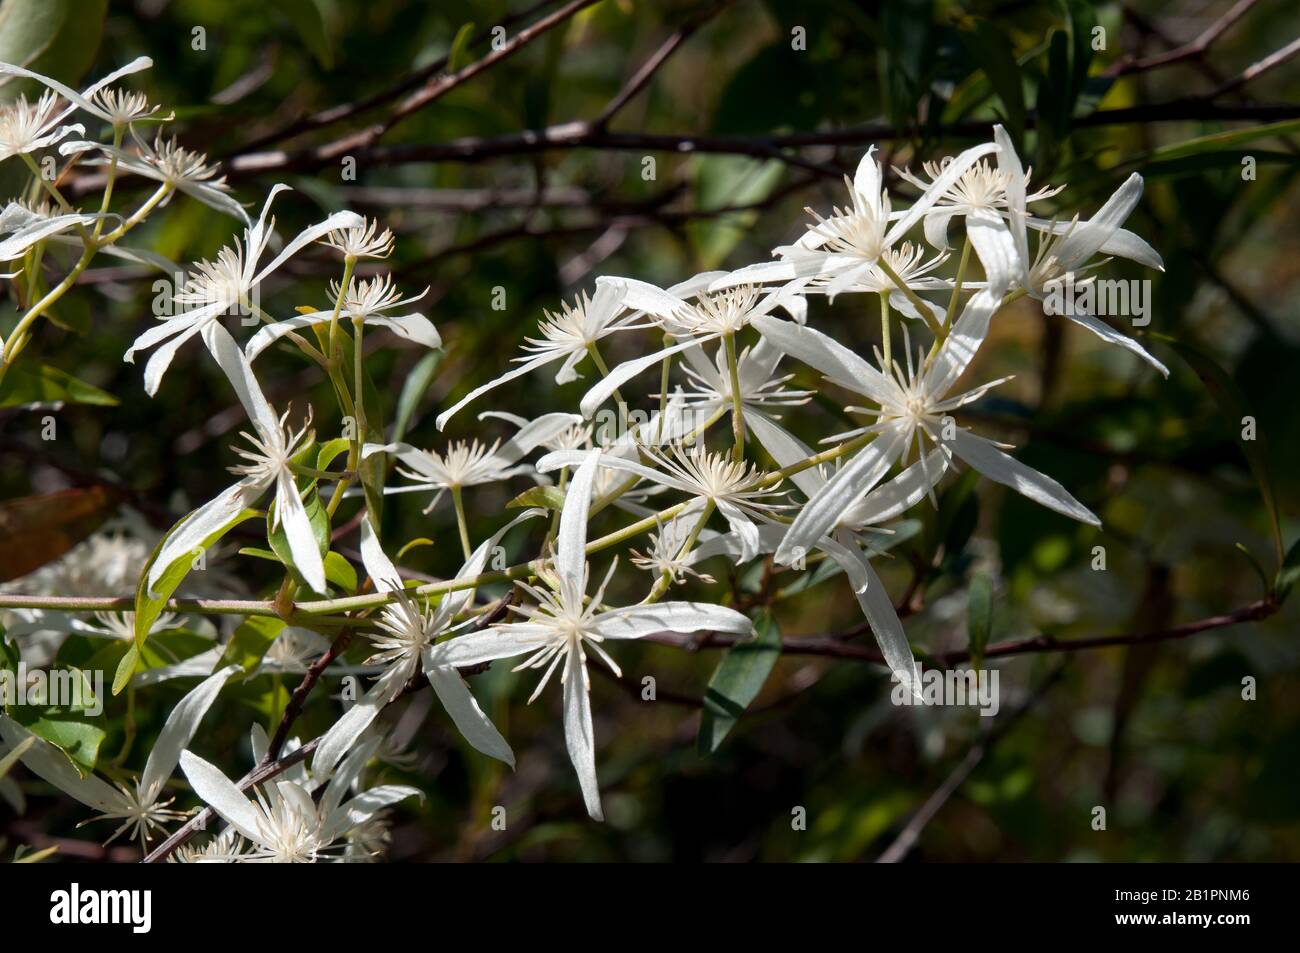 Sydney Australia, flowering stem of clematis aristata vine in the sunshine Stock Photo